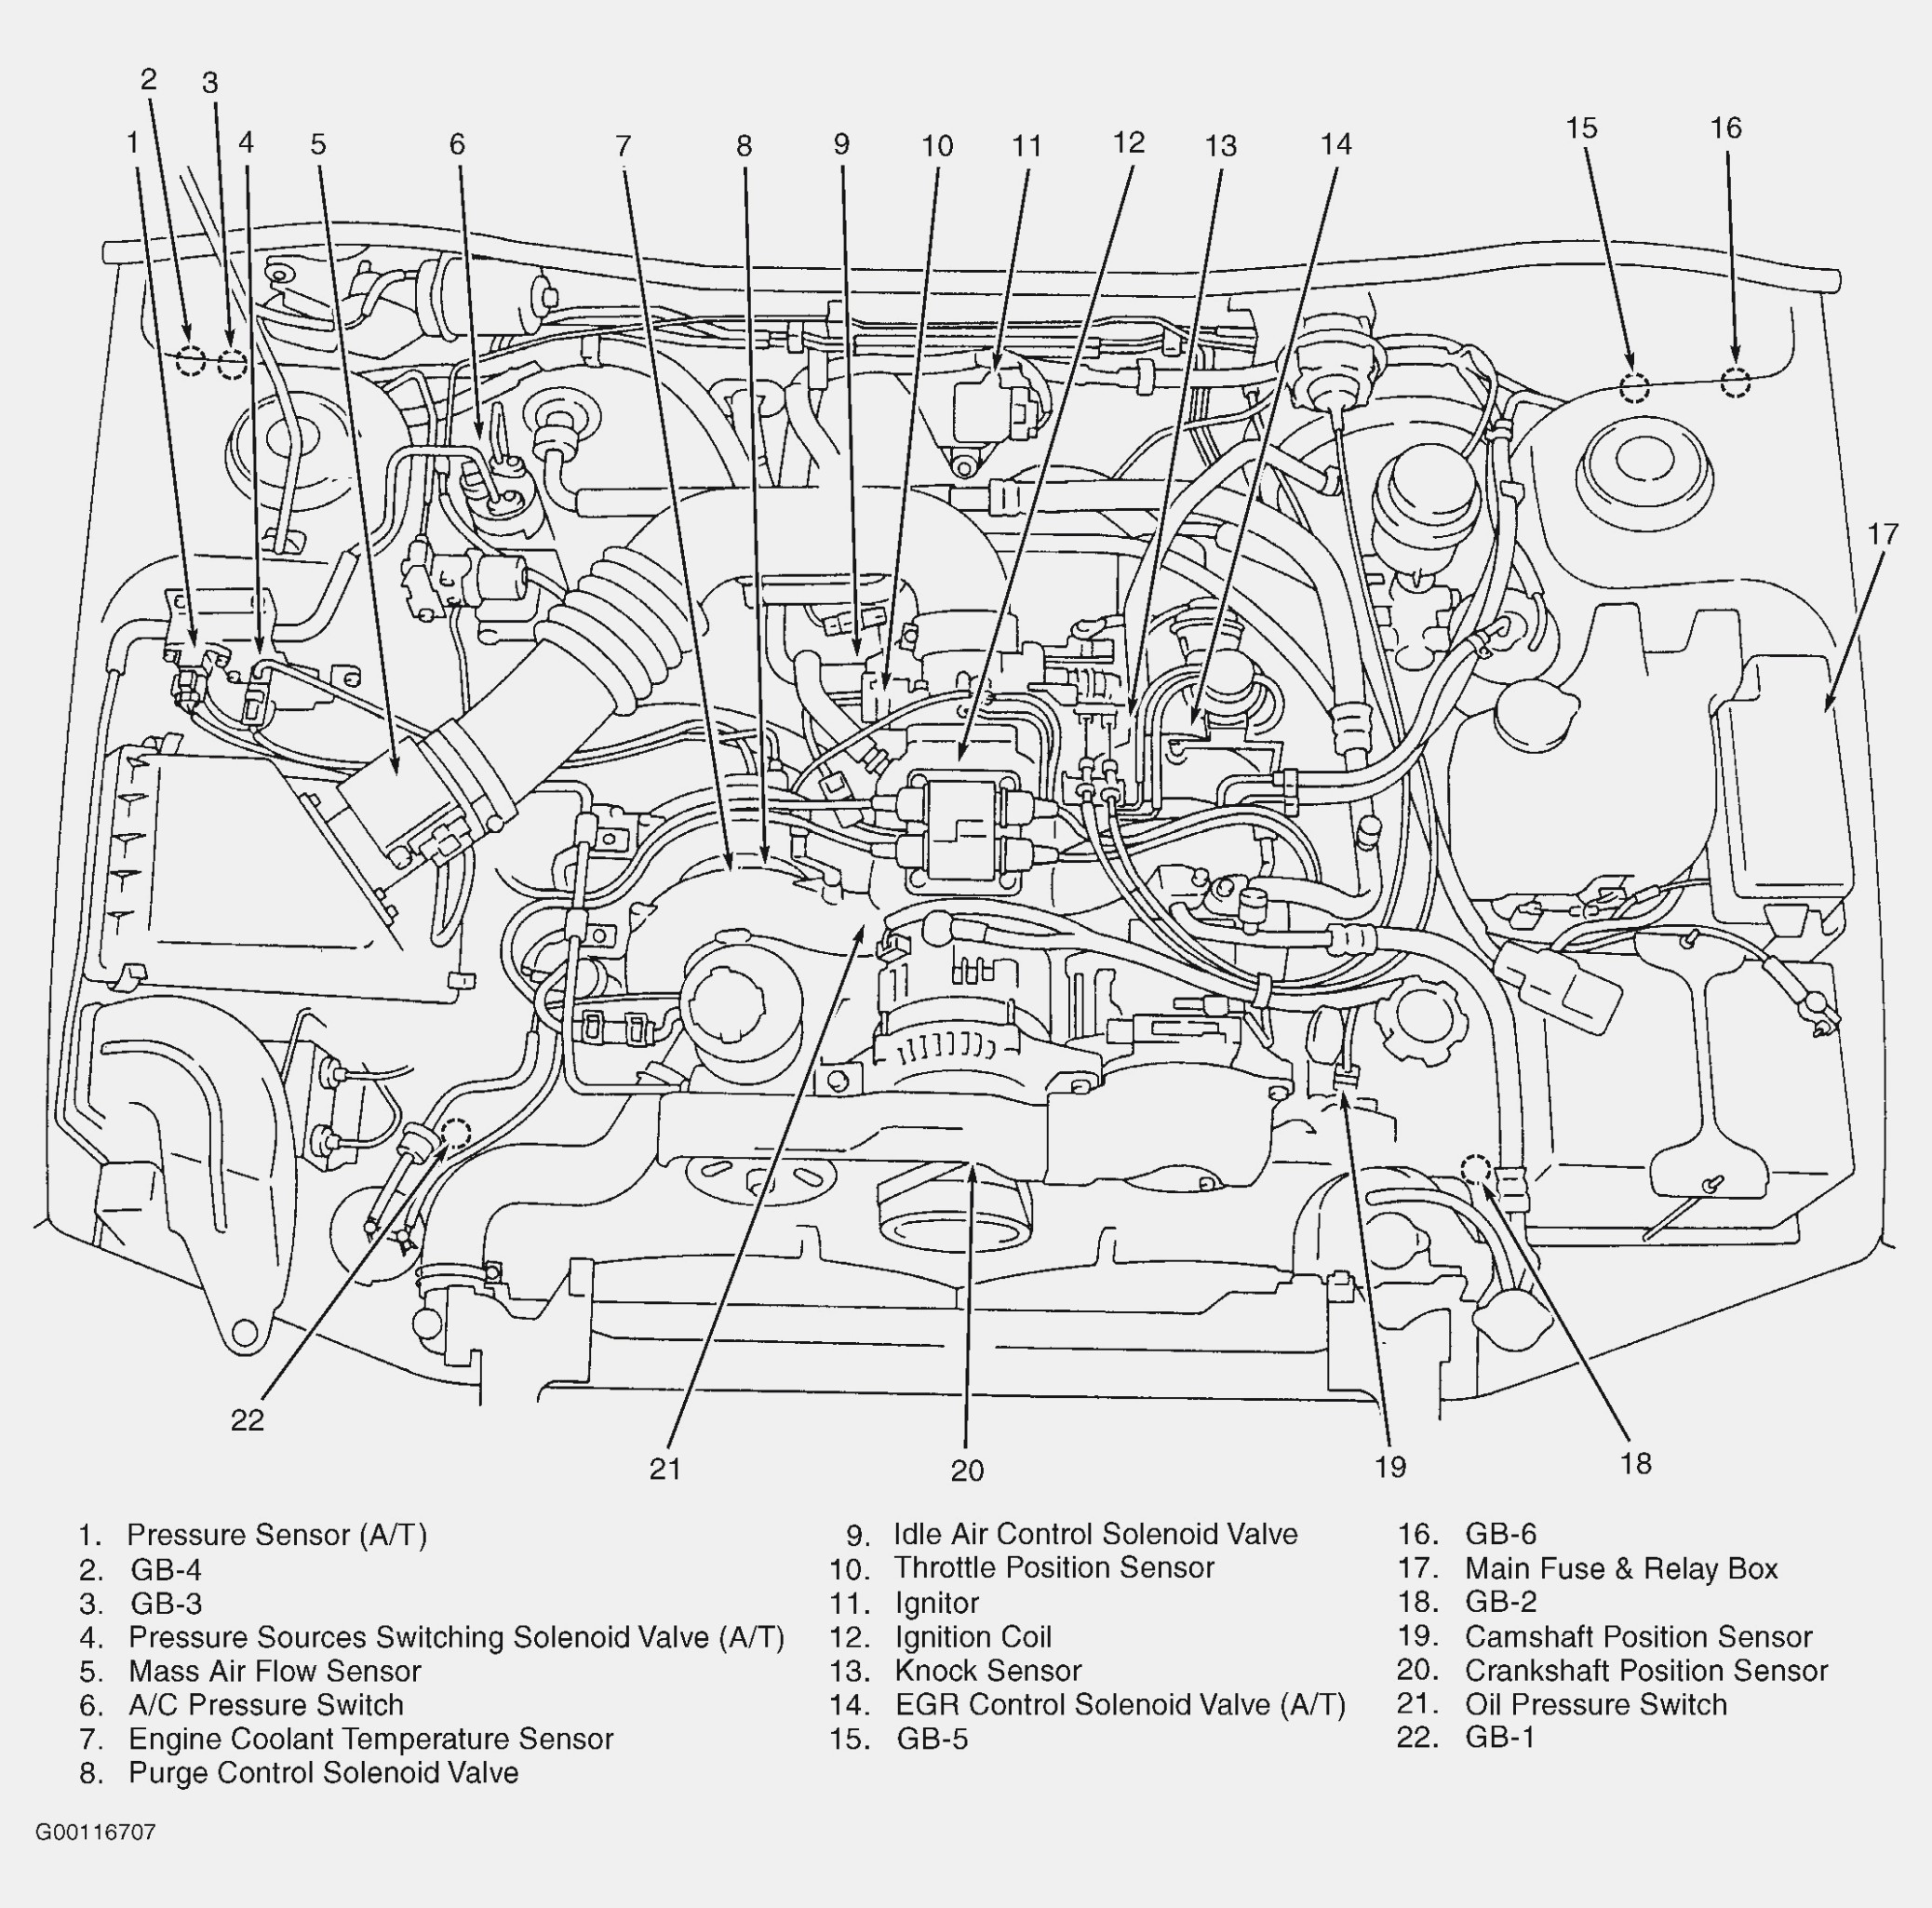 2007 Subaru forester Engine Diagram 2012 Subaru Wiring Diagram Wiring Diagram toolbox Of 2007 Subaru forester Engine Diagram